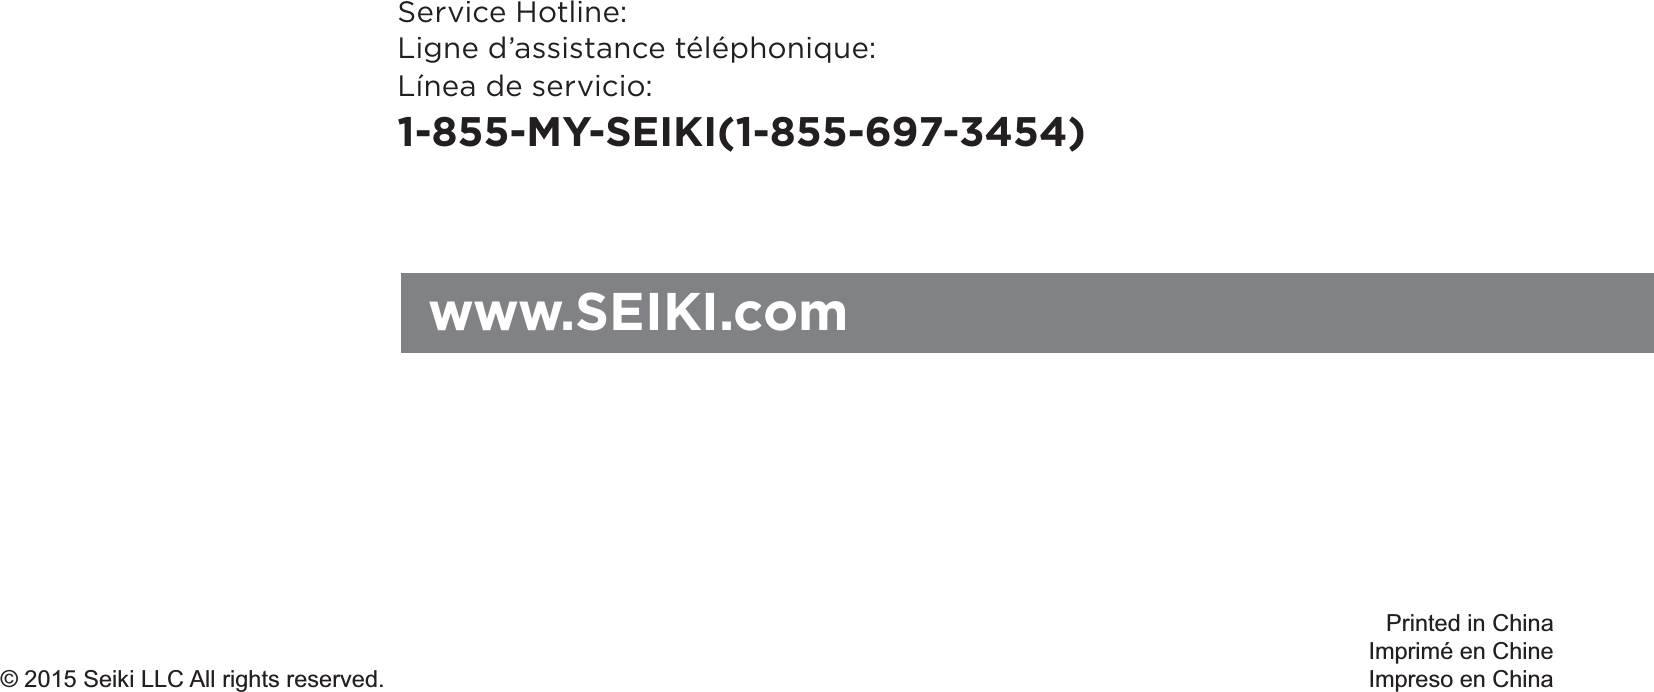 www.SEIKI.com© 2015 Seiki LLC All rights reserved.Printed in ChinaImprimé en ChineImpreso en ChinaService Hotline:Ligne d’assistance téléphonique:Línea de servicio:1-855-MY-SEIKI(1-855-697-3454)